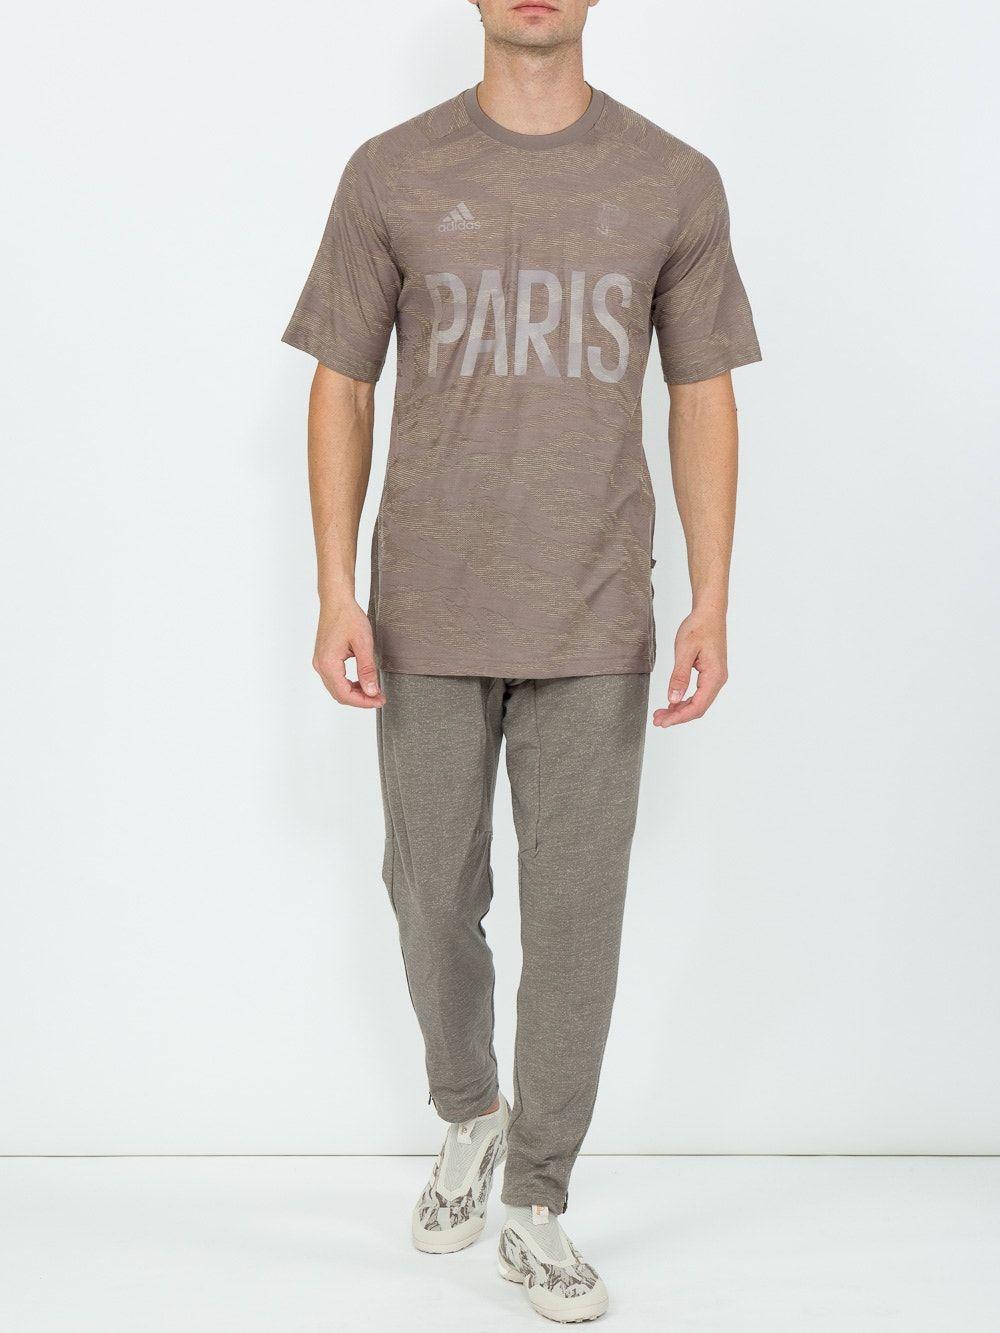 adidas X Paul Pogba Paris T-shirt for Men | Lyst